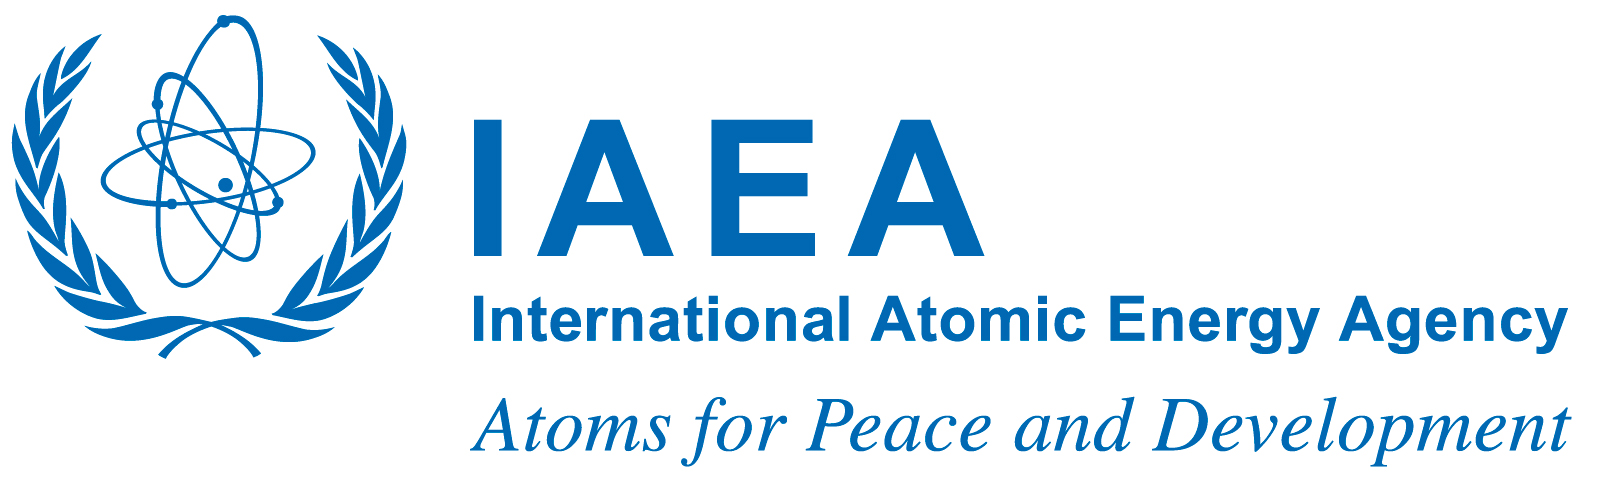 IAEA_NEW_Logo_E_horizontal_blue.jpg